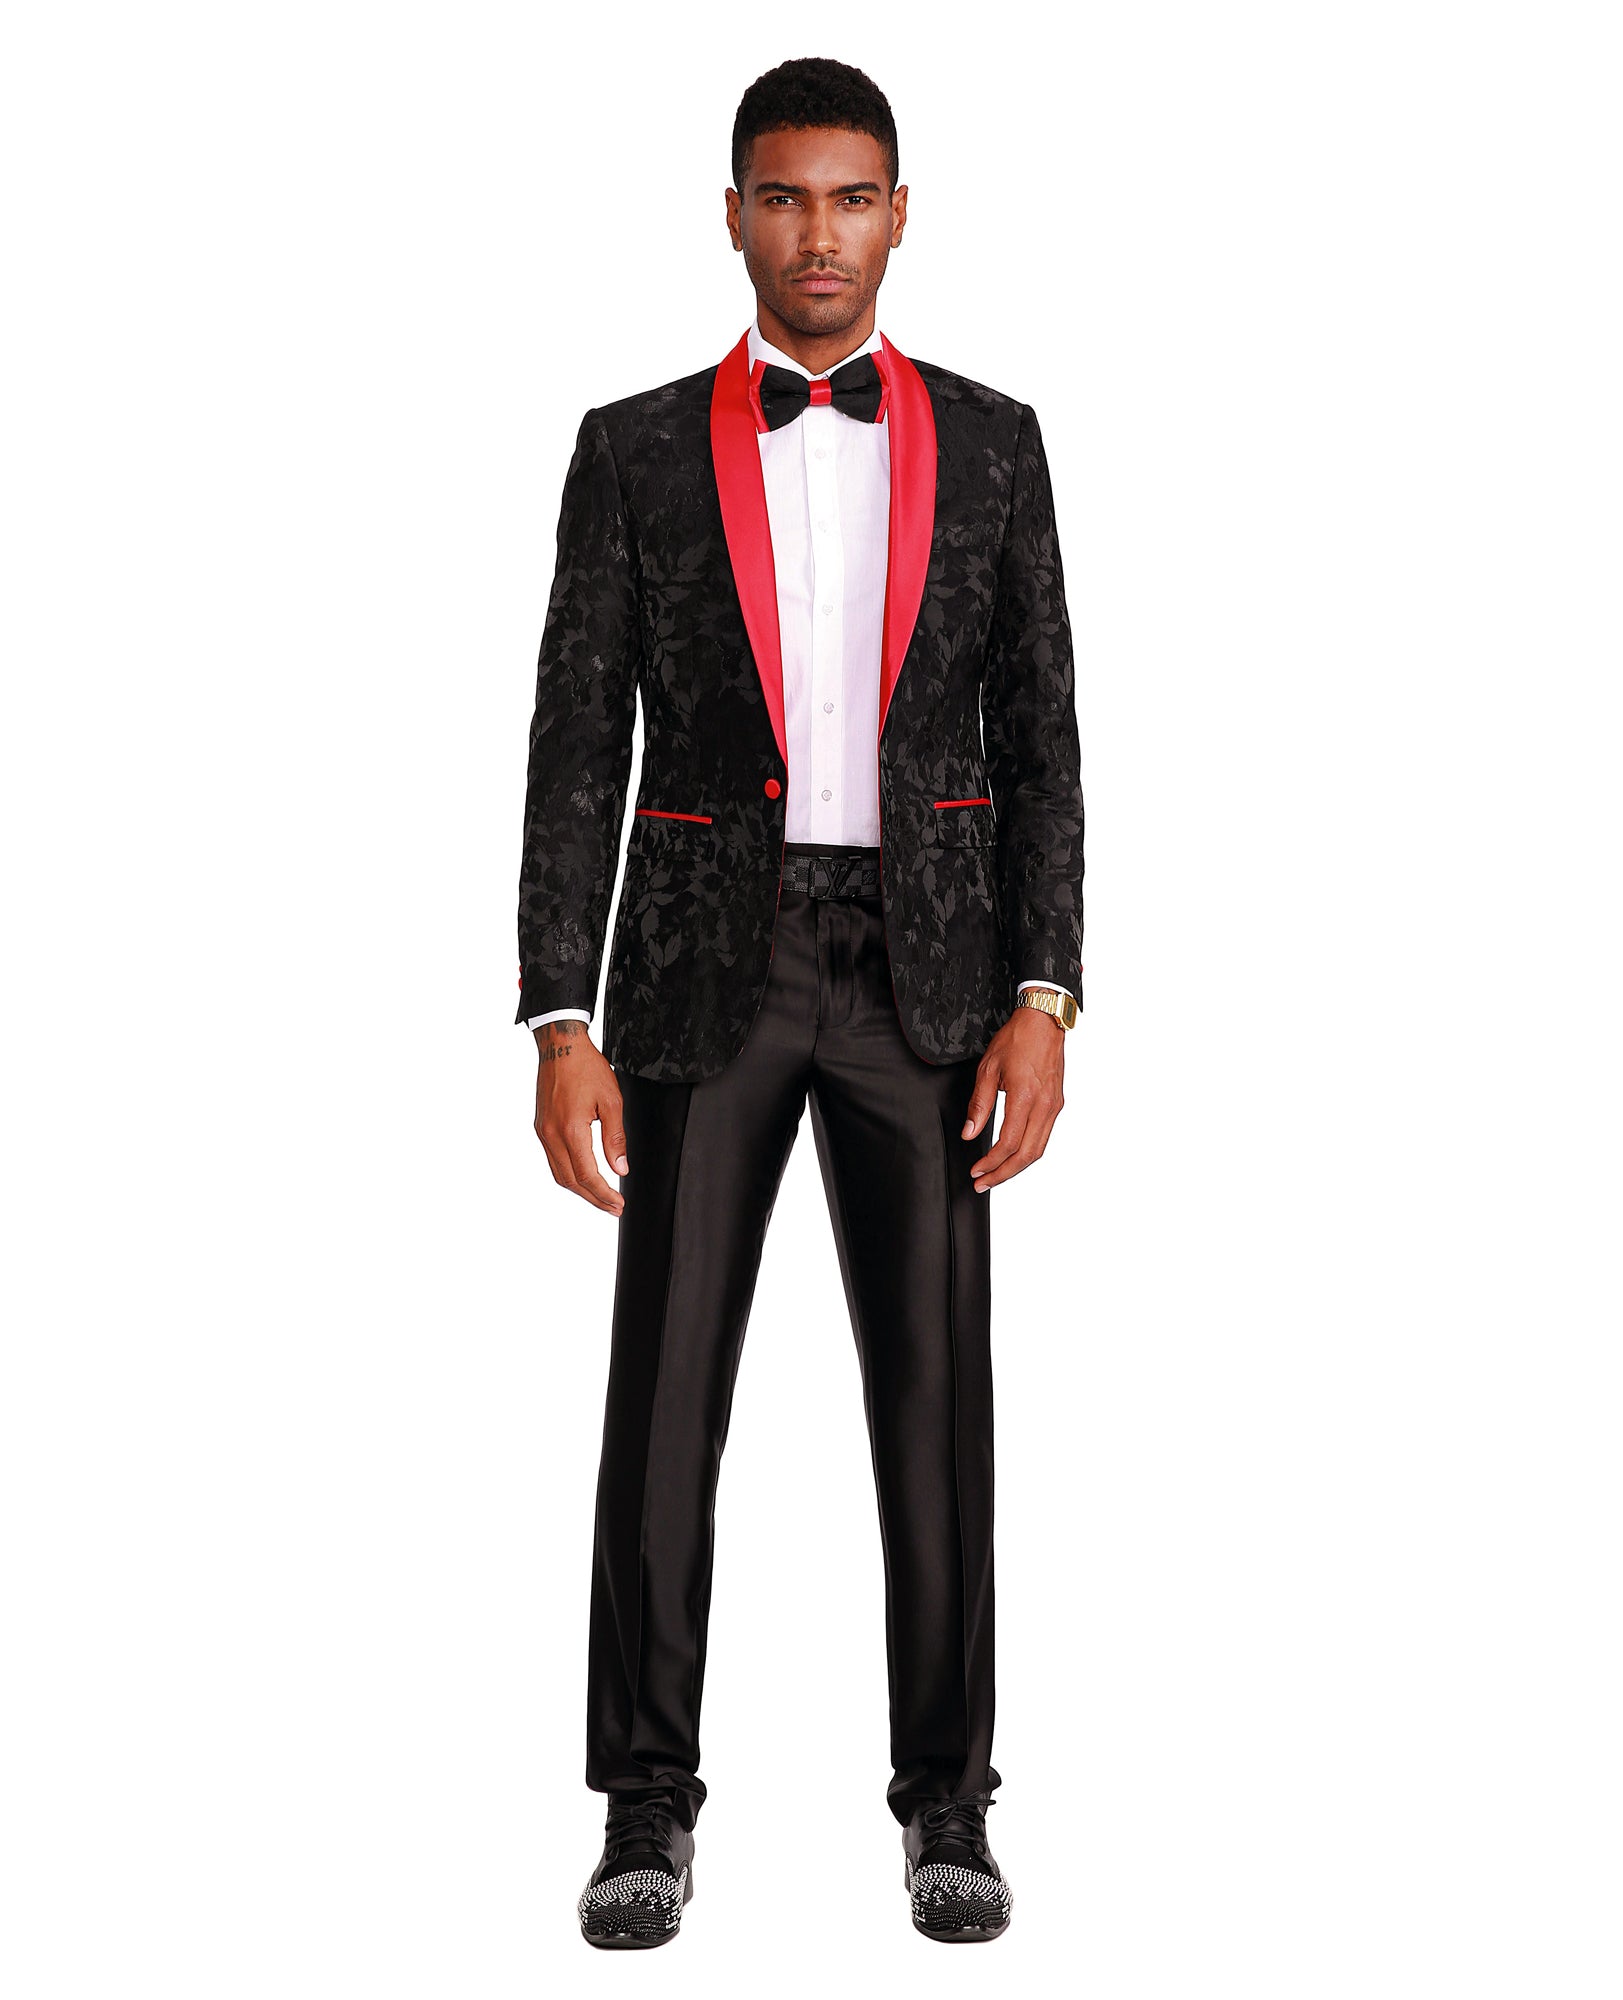 Men's Premium Prom Floral Satin Shawl Collar Jacket, Black/Red